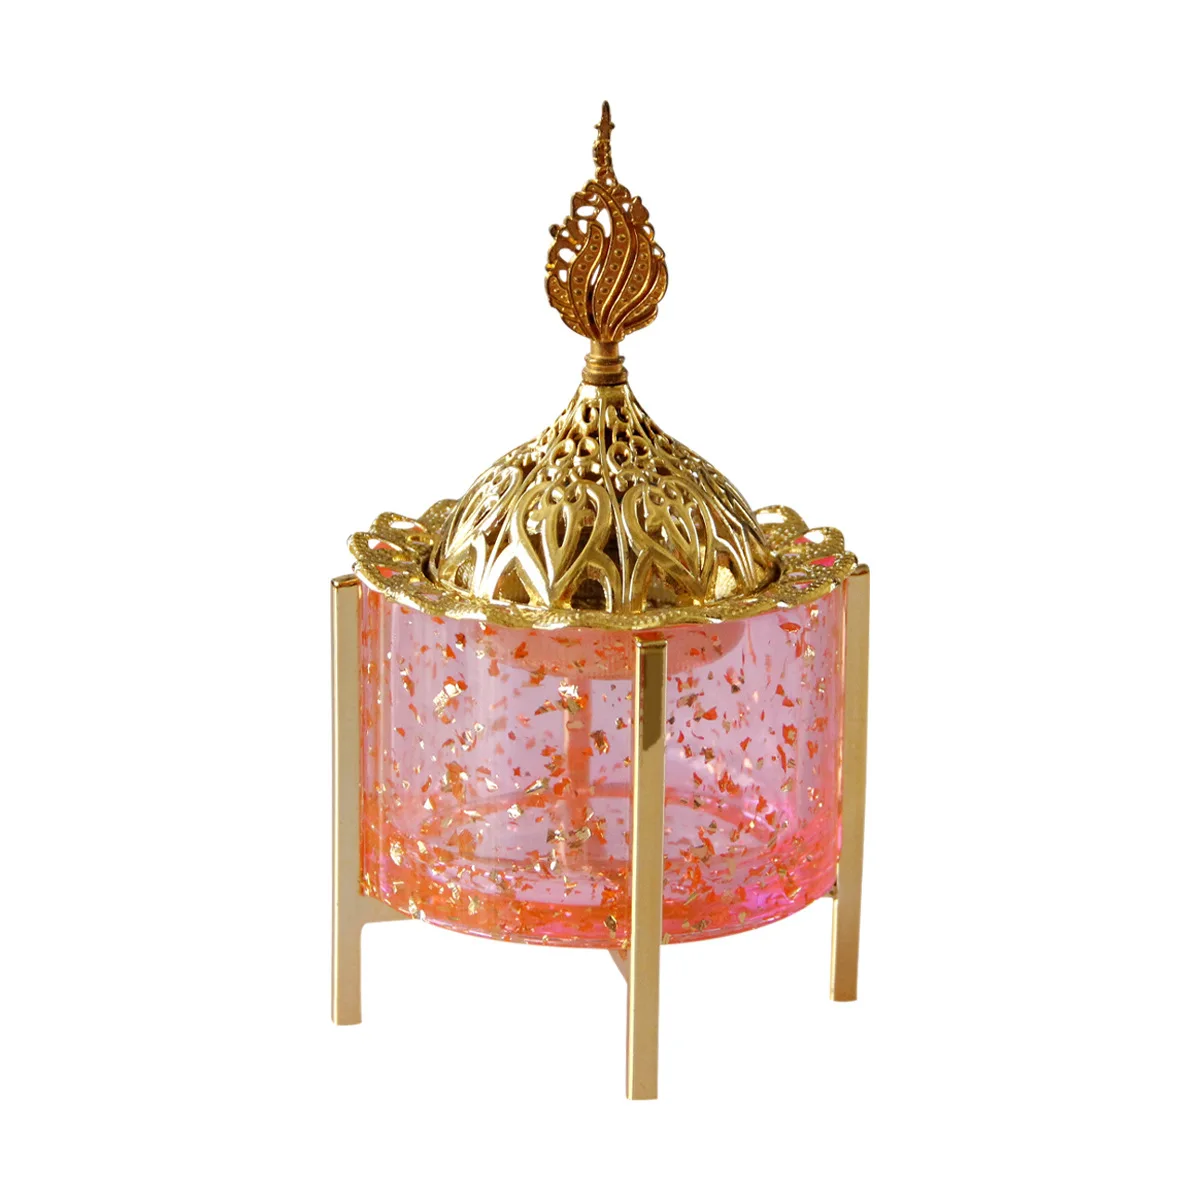 

Four-corner bracket pink gold resin metal table top ornament aoud incense burner with golden hollow lid